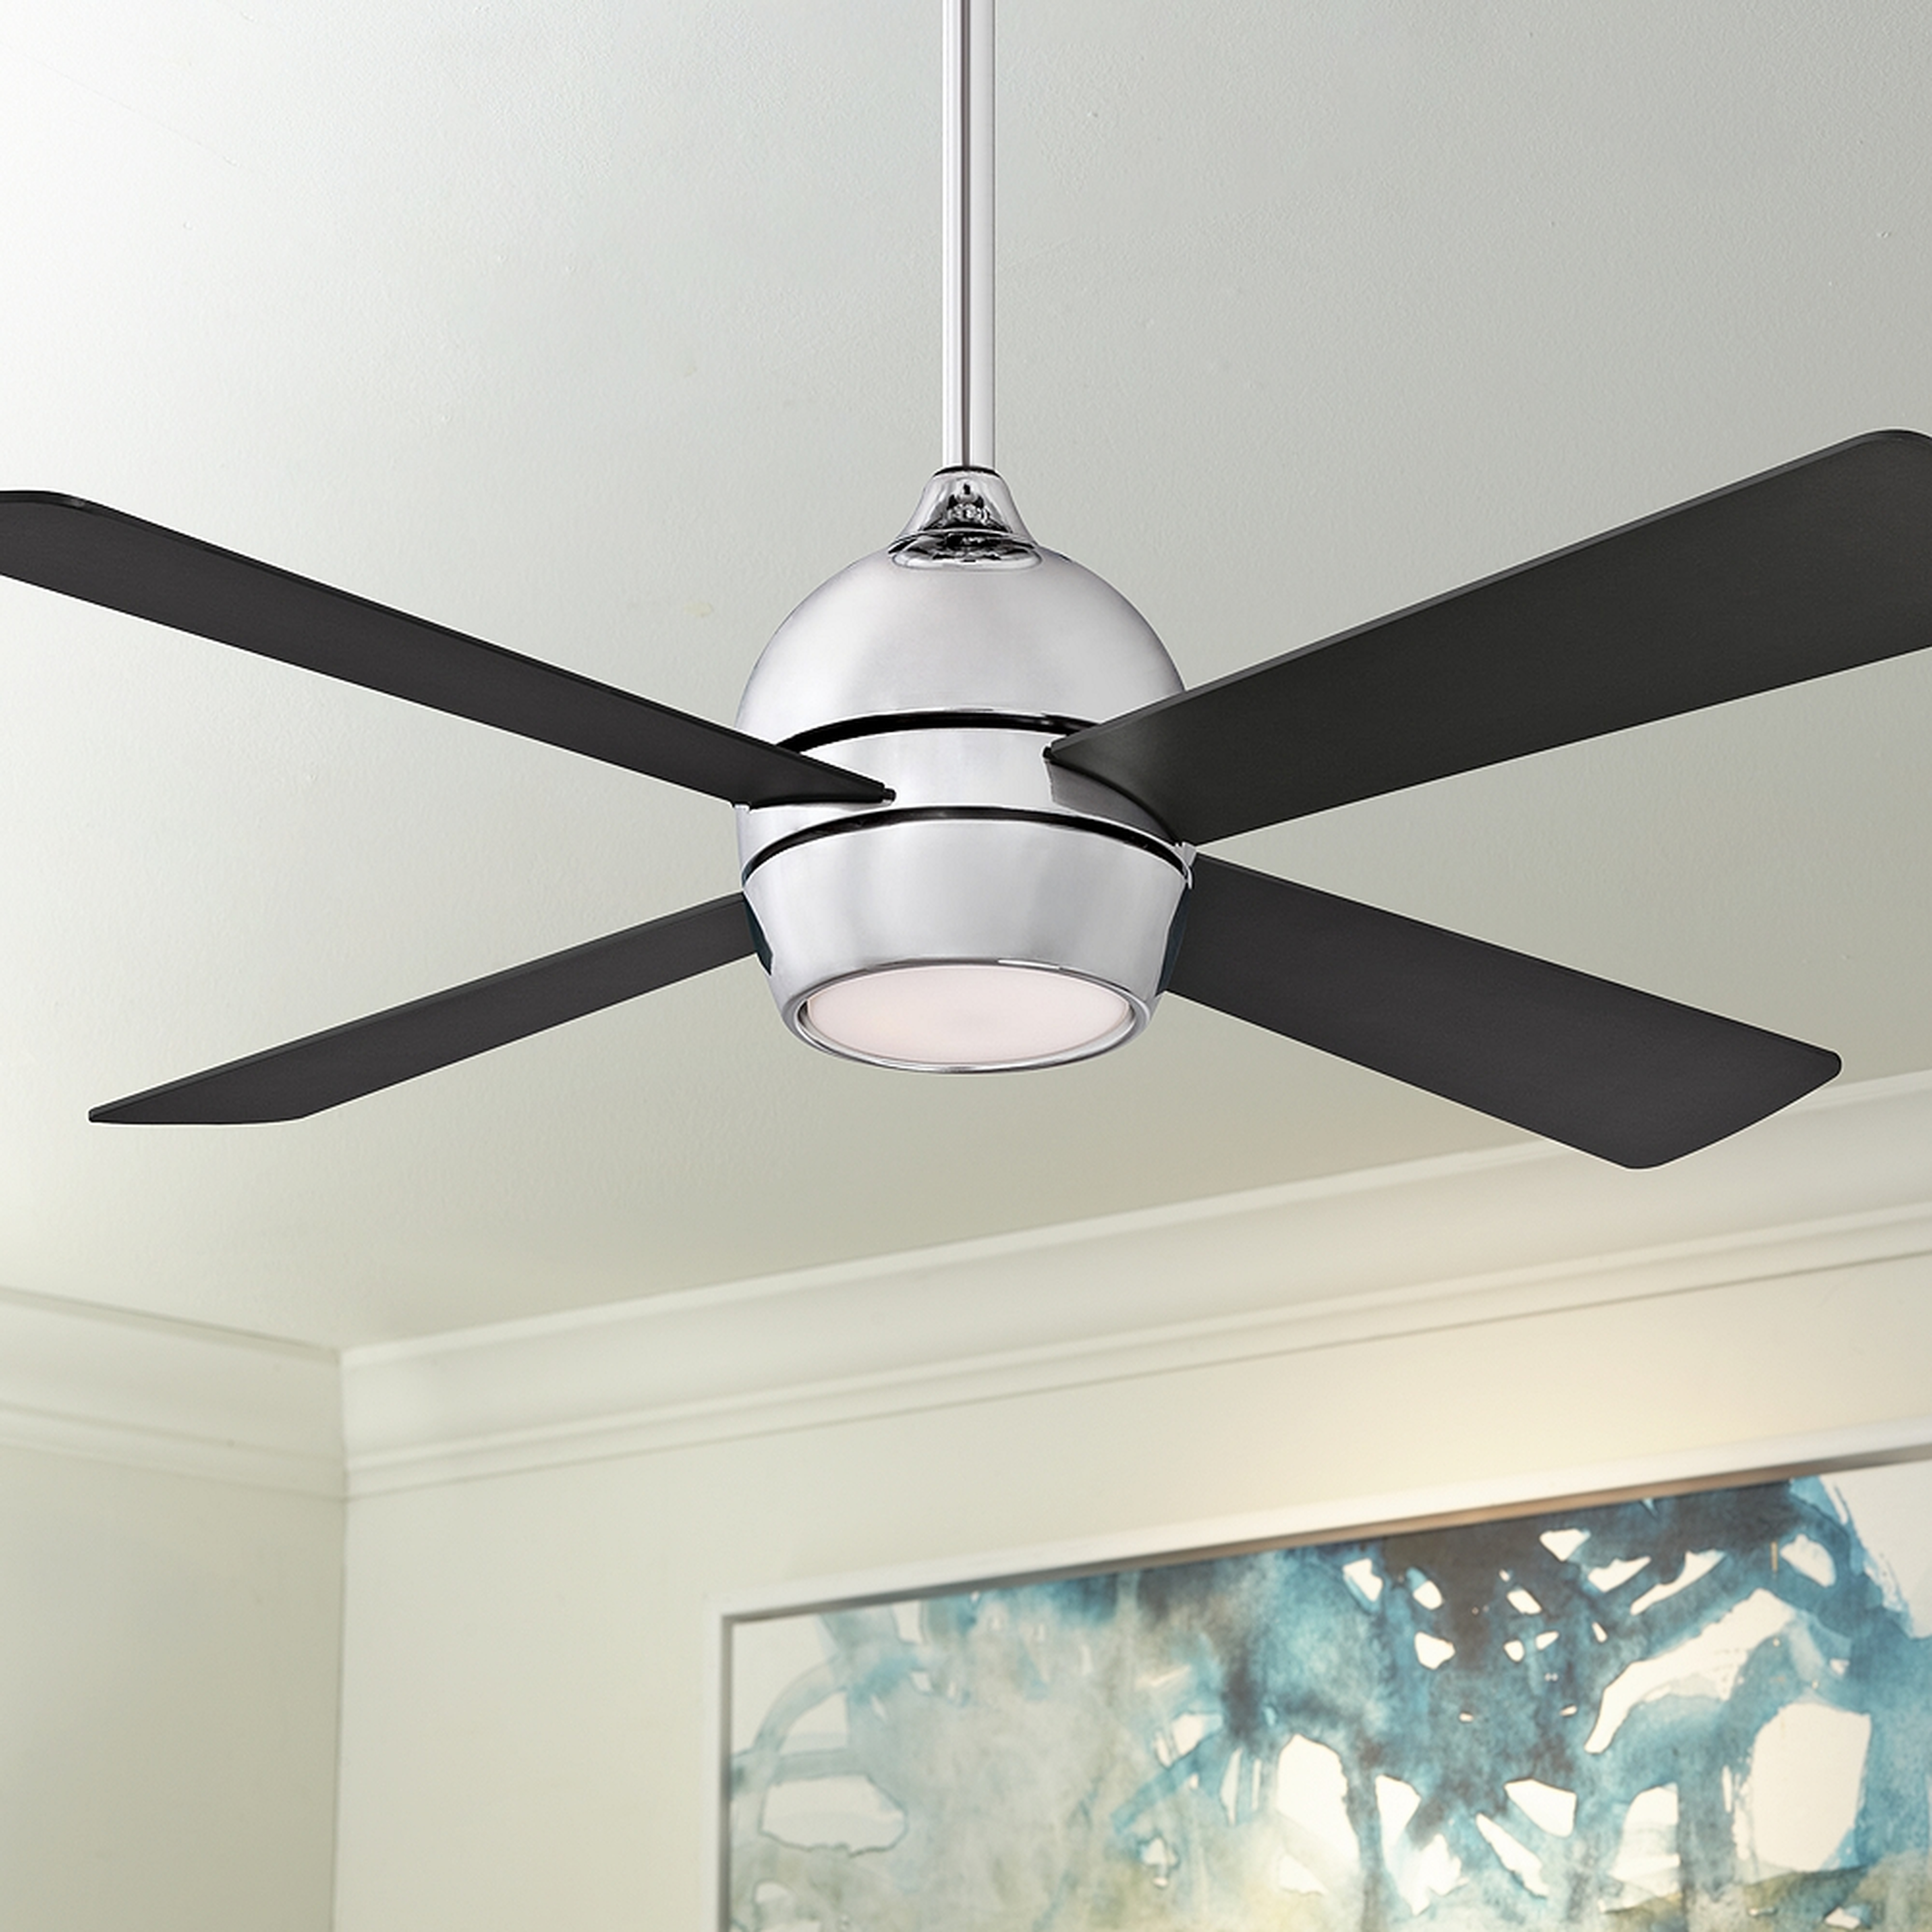 44" Fanimation Kwad Chrome and Black LED Ceiling Fan - Style # 83T53 - Lamps Plus